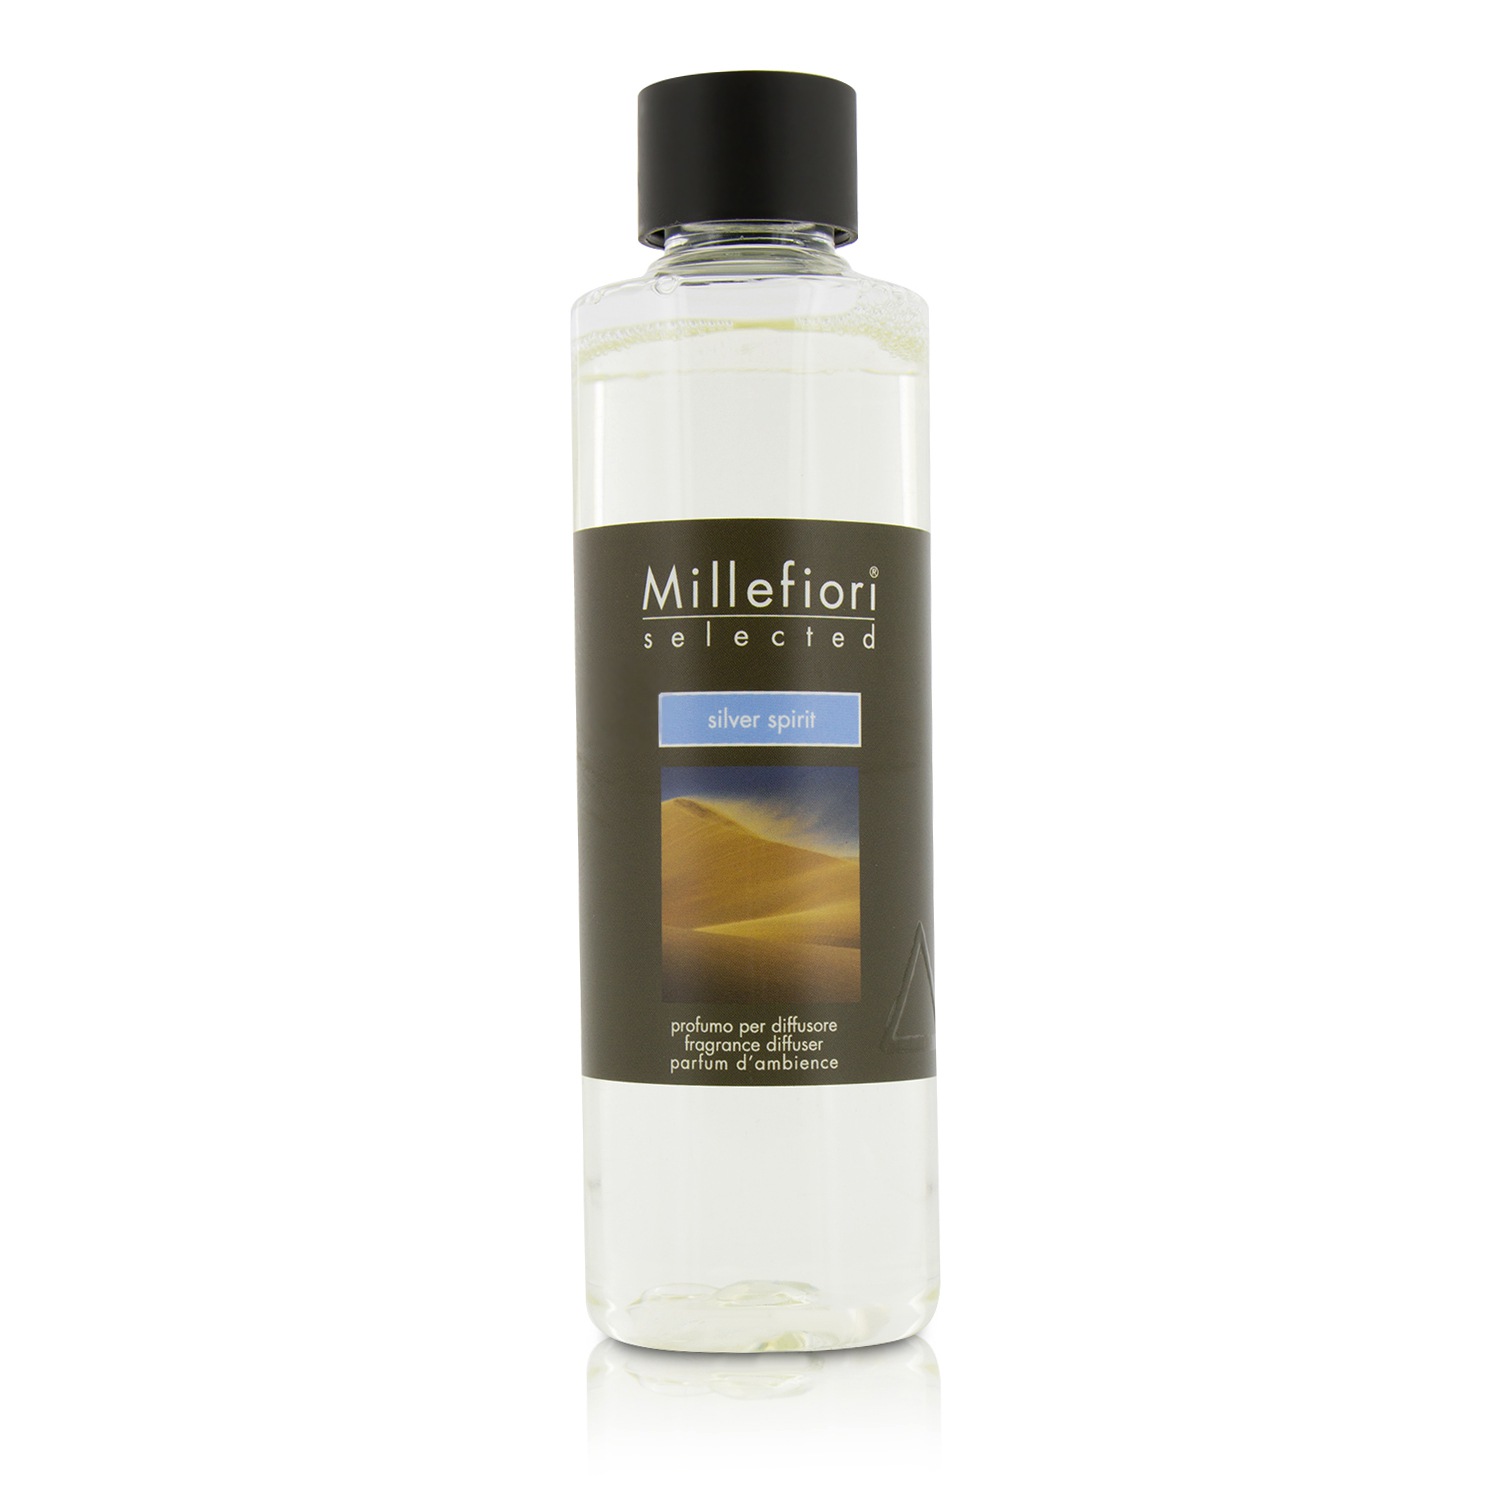 Selected Fragrance Diffuser Refill - Silver Spirit Millefiori Image